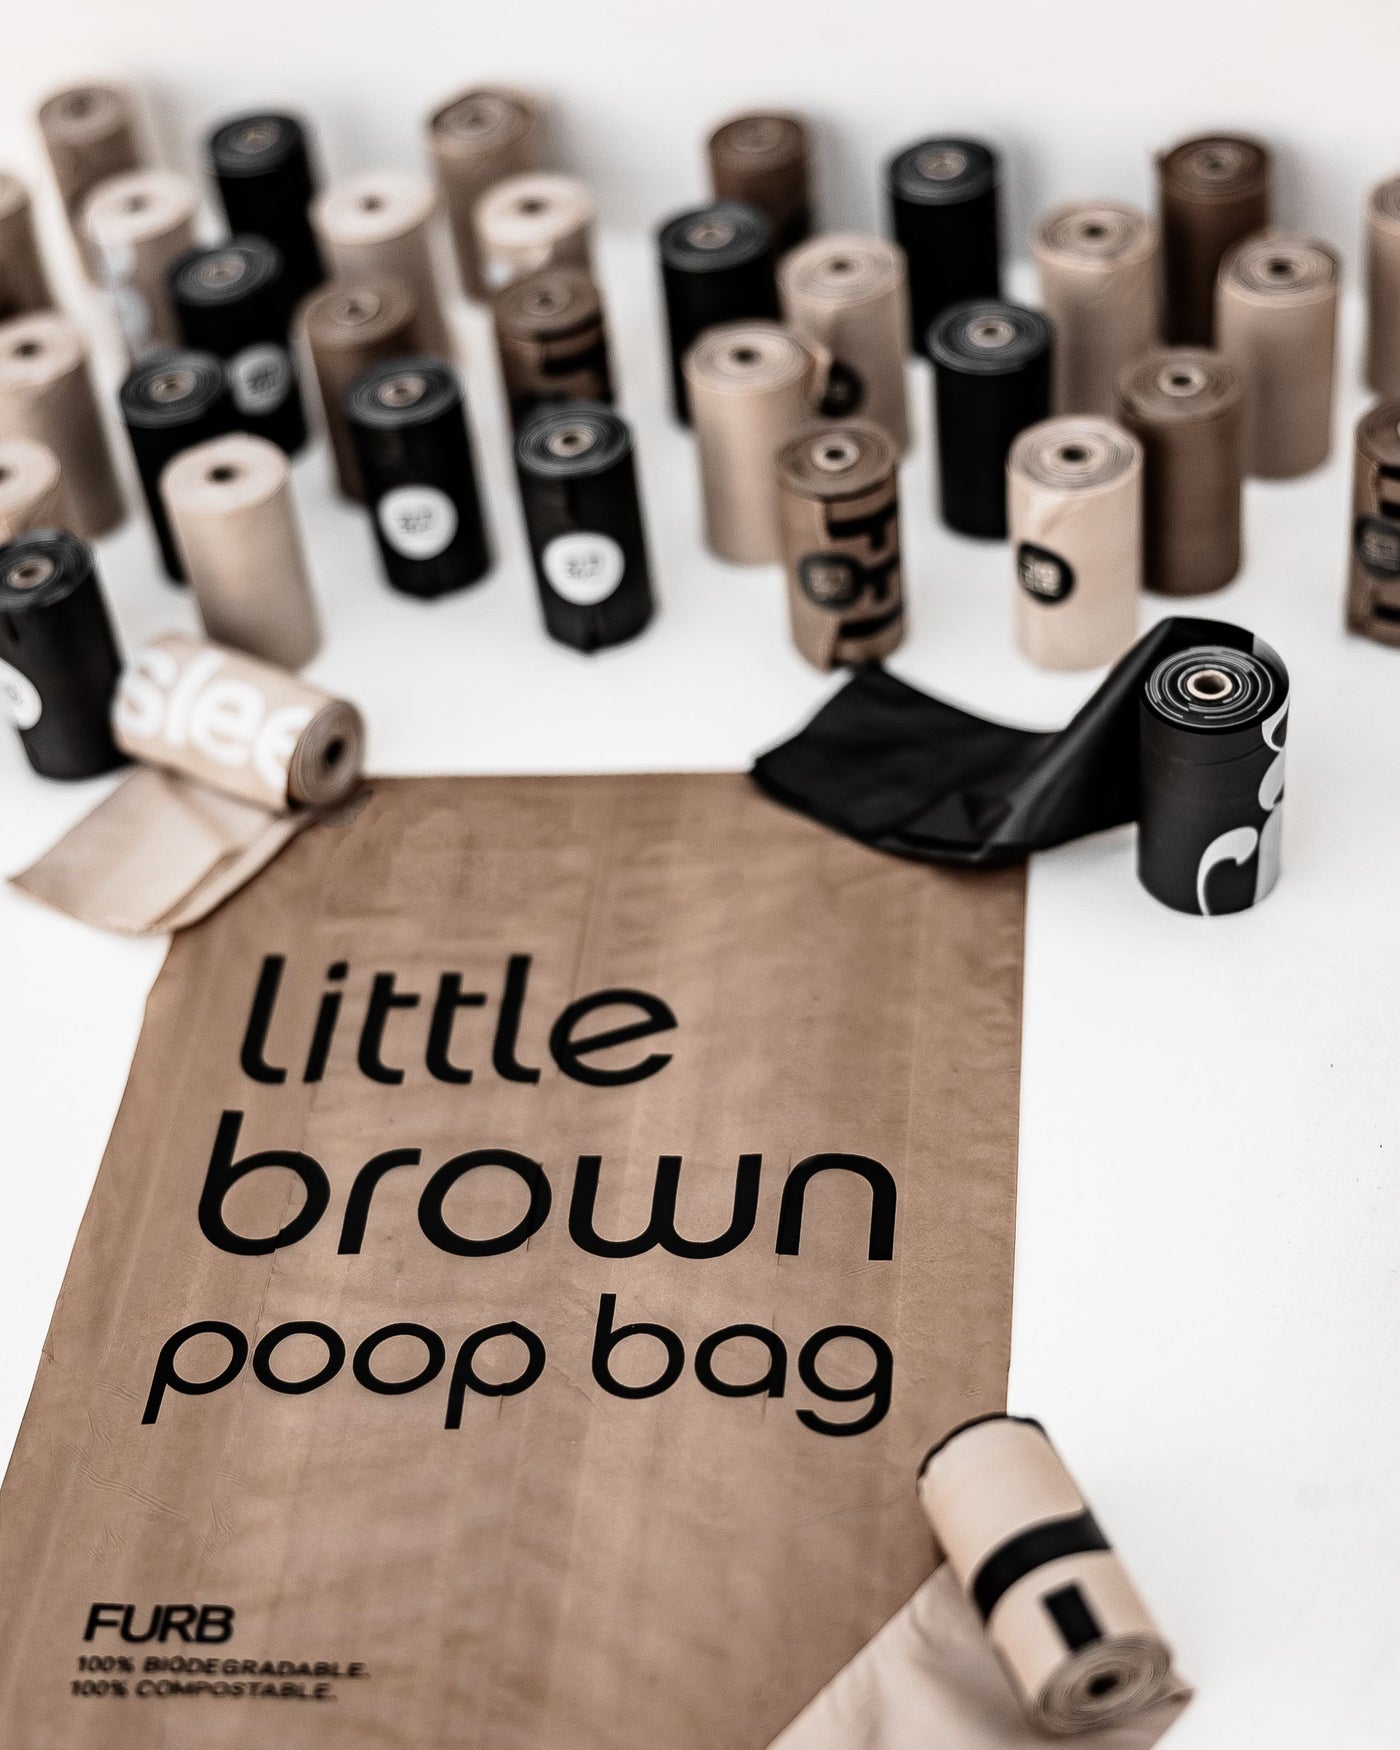 FURB Poop Bags Product Image Detail